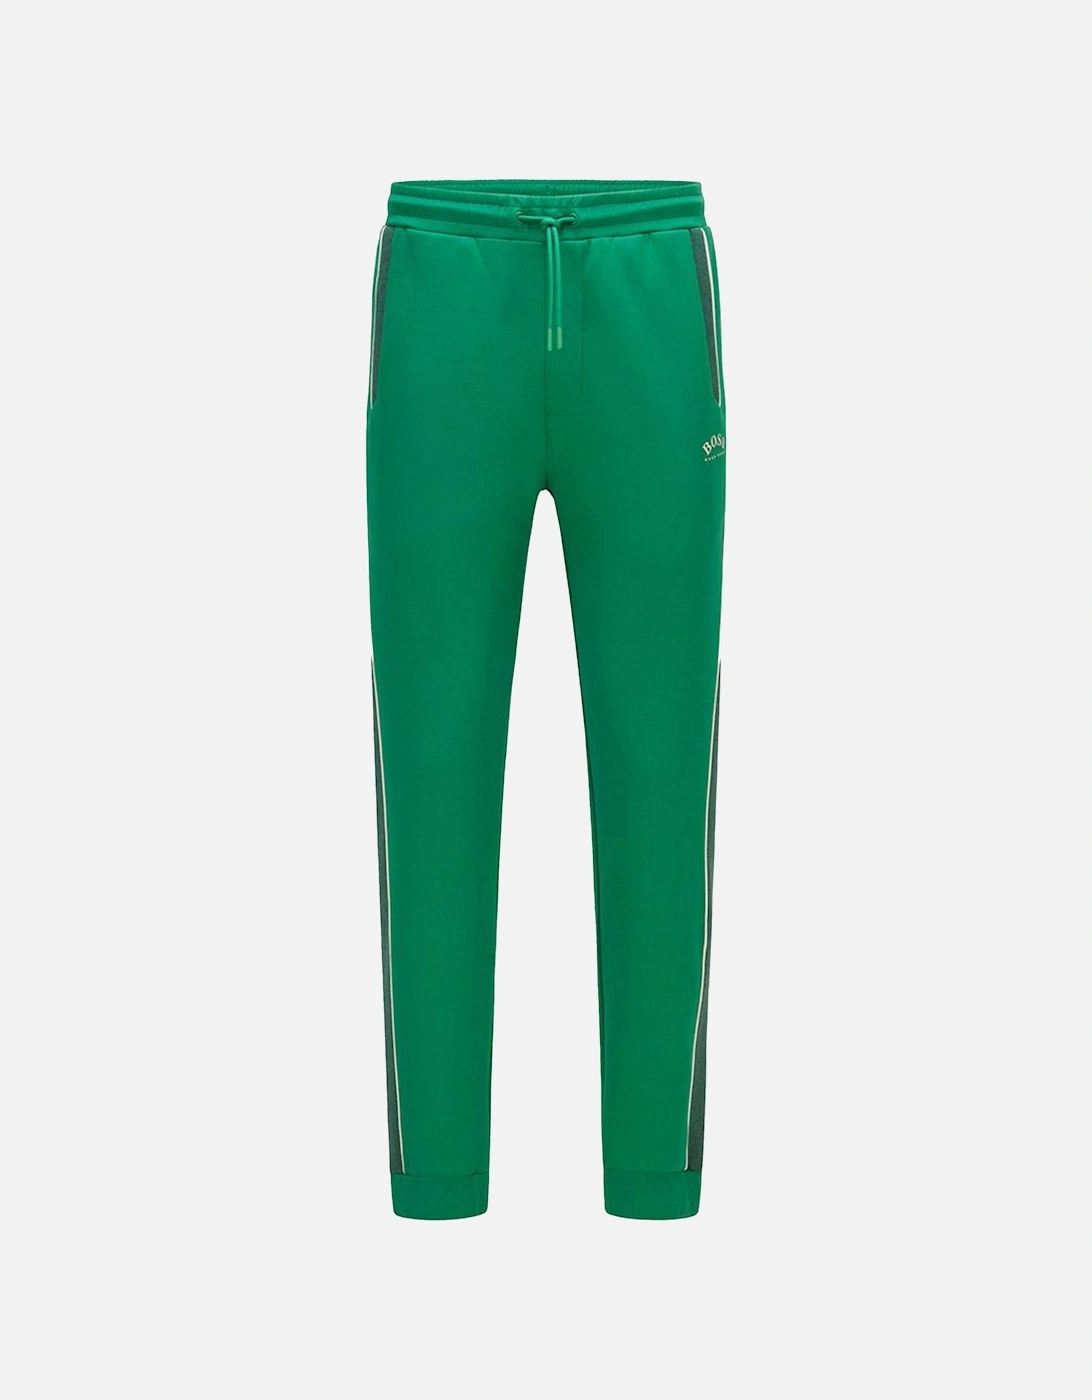 Hadiko 1 sweat pants green, 3 of 2